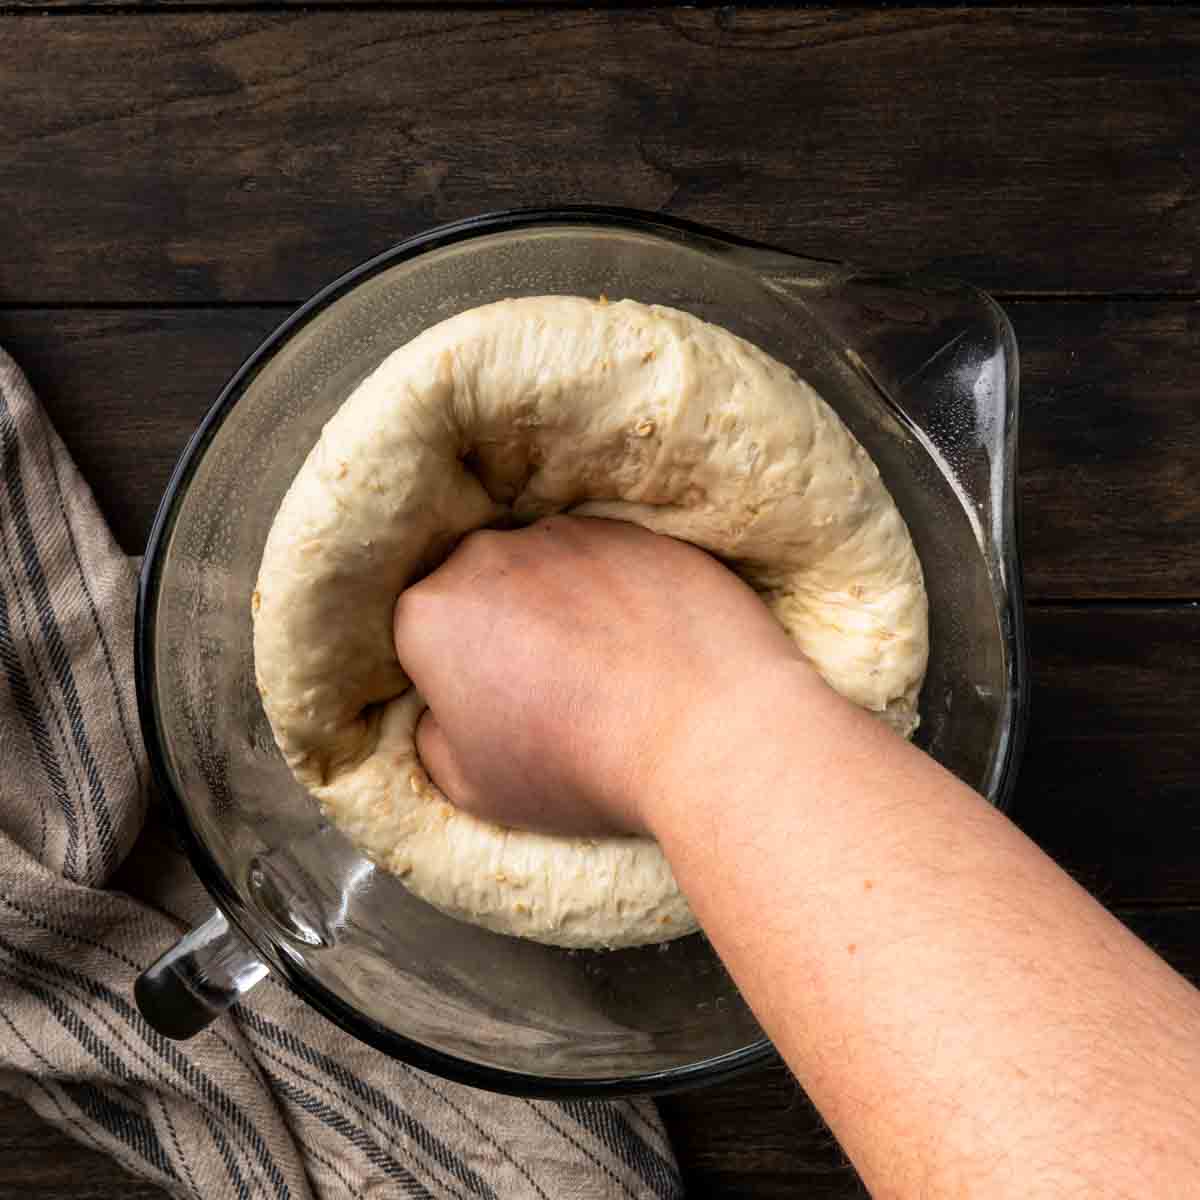 Punching down the dough to deflate